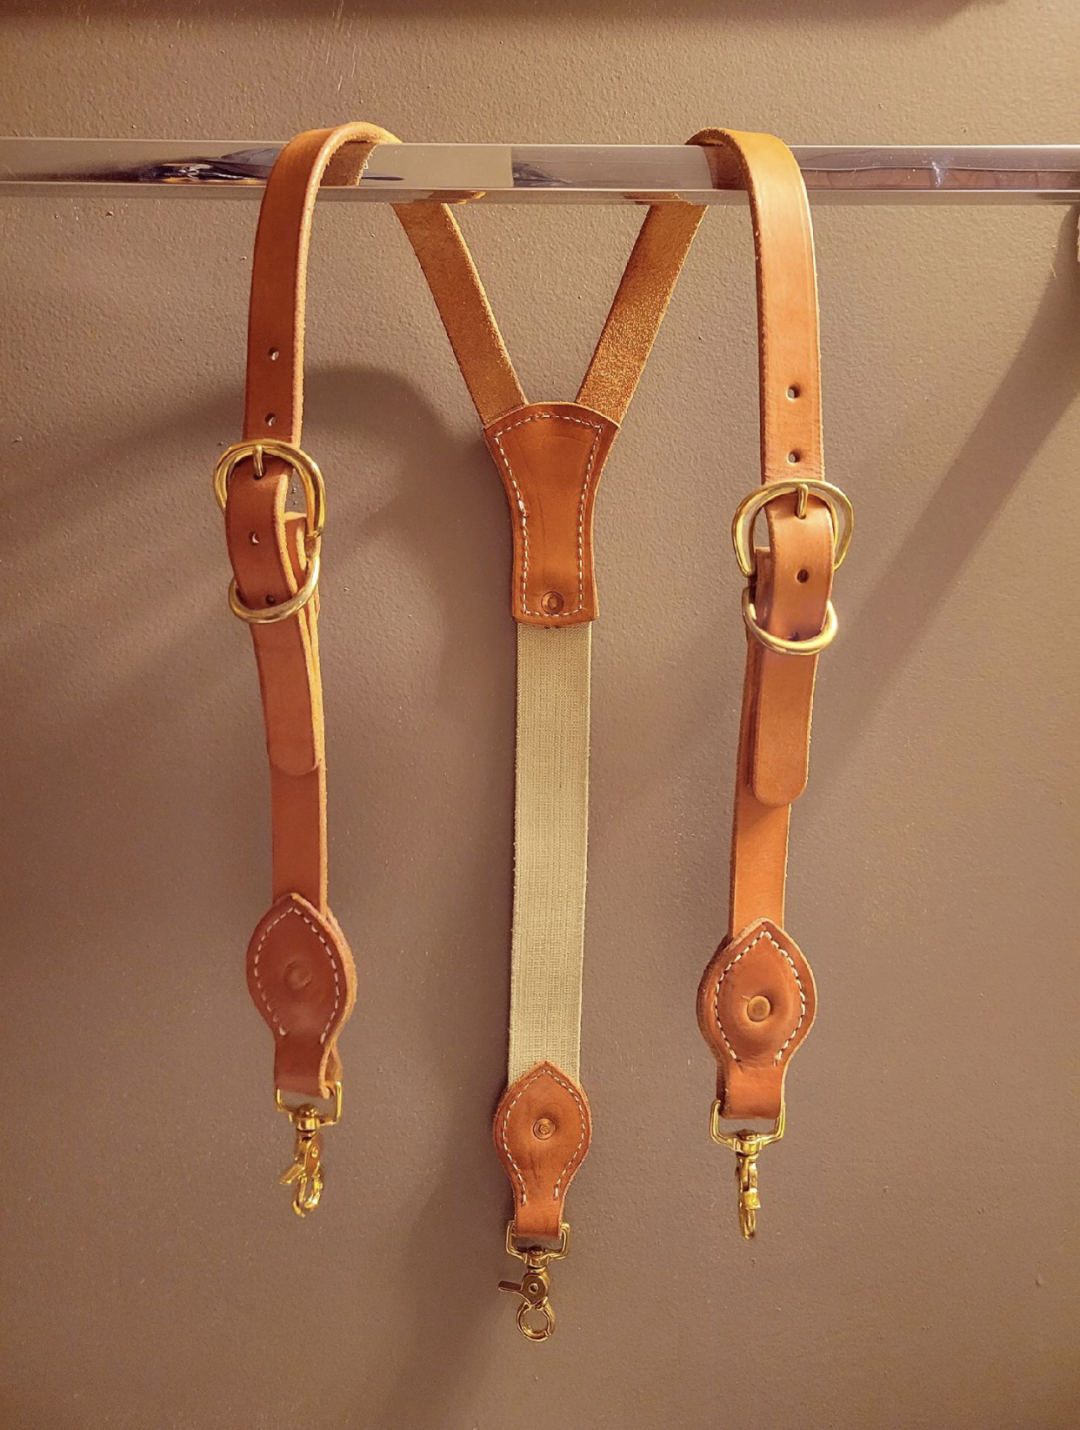 Handmade Leather Suspenders - Grommets Leathercraft - heavy duty